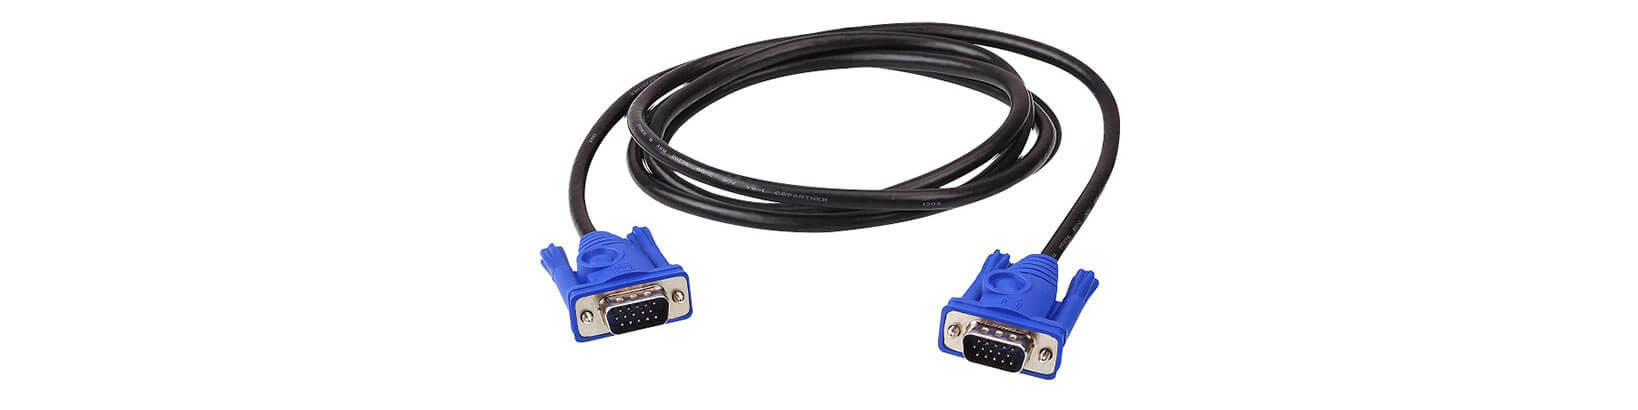 Cable VGA pas cher